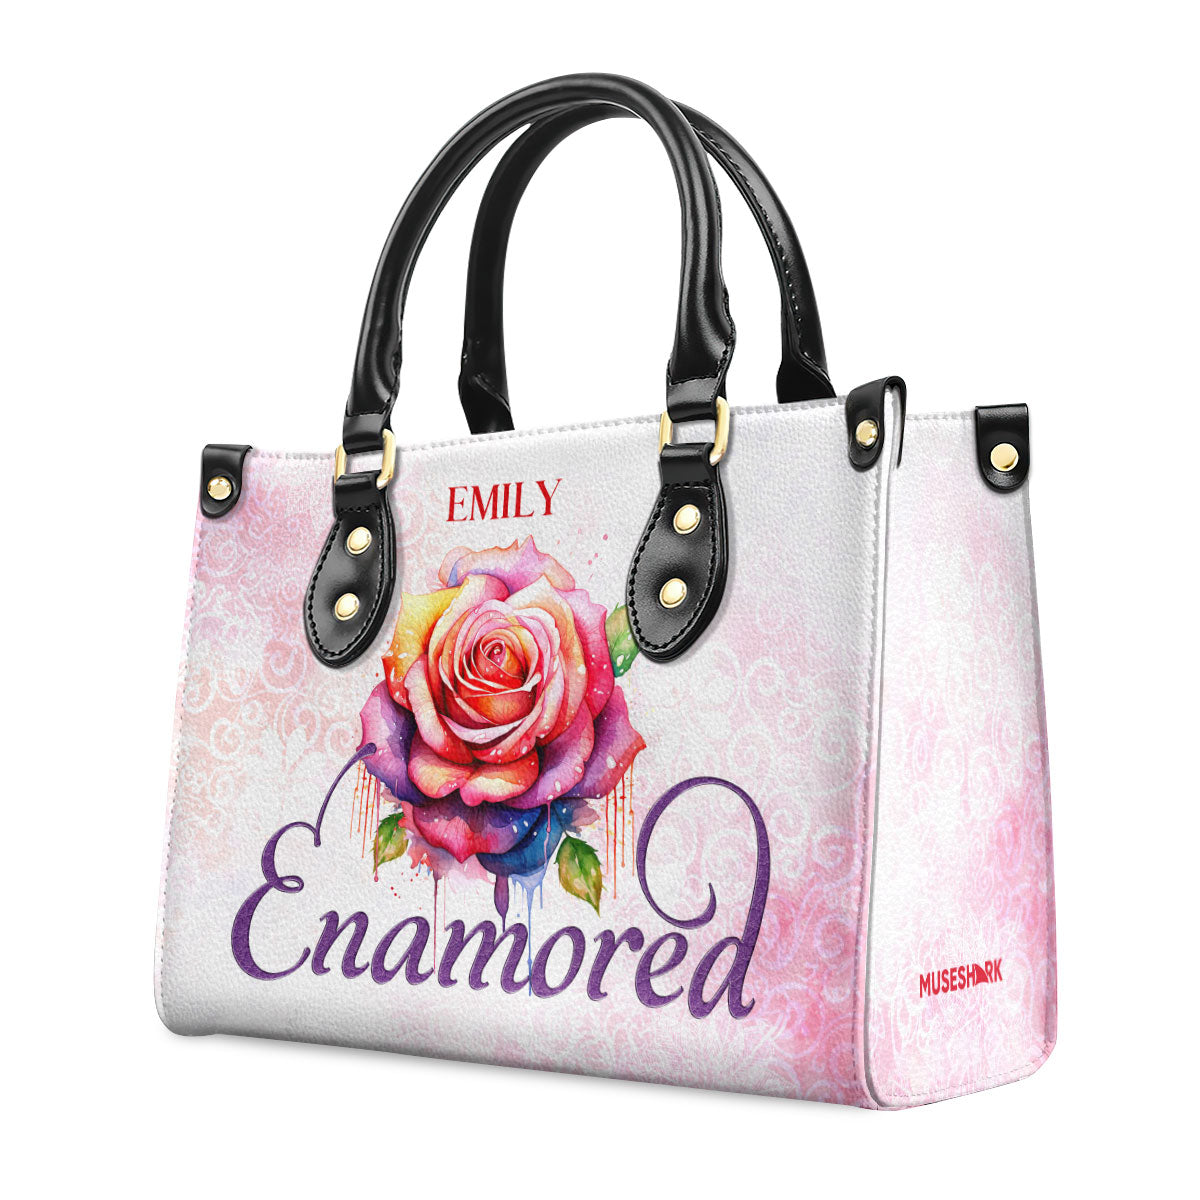 Enamored - Personalized Leather Handbag MSM29